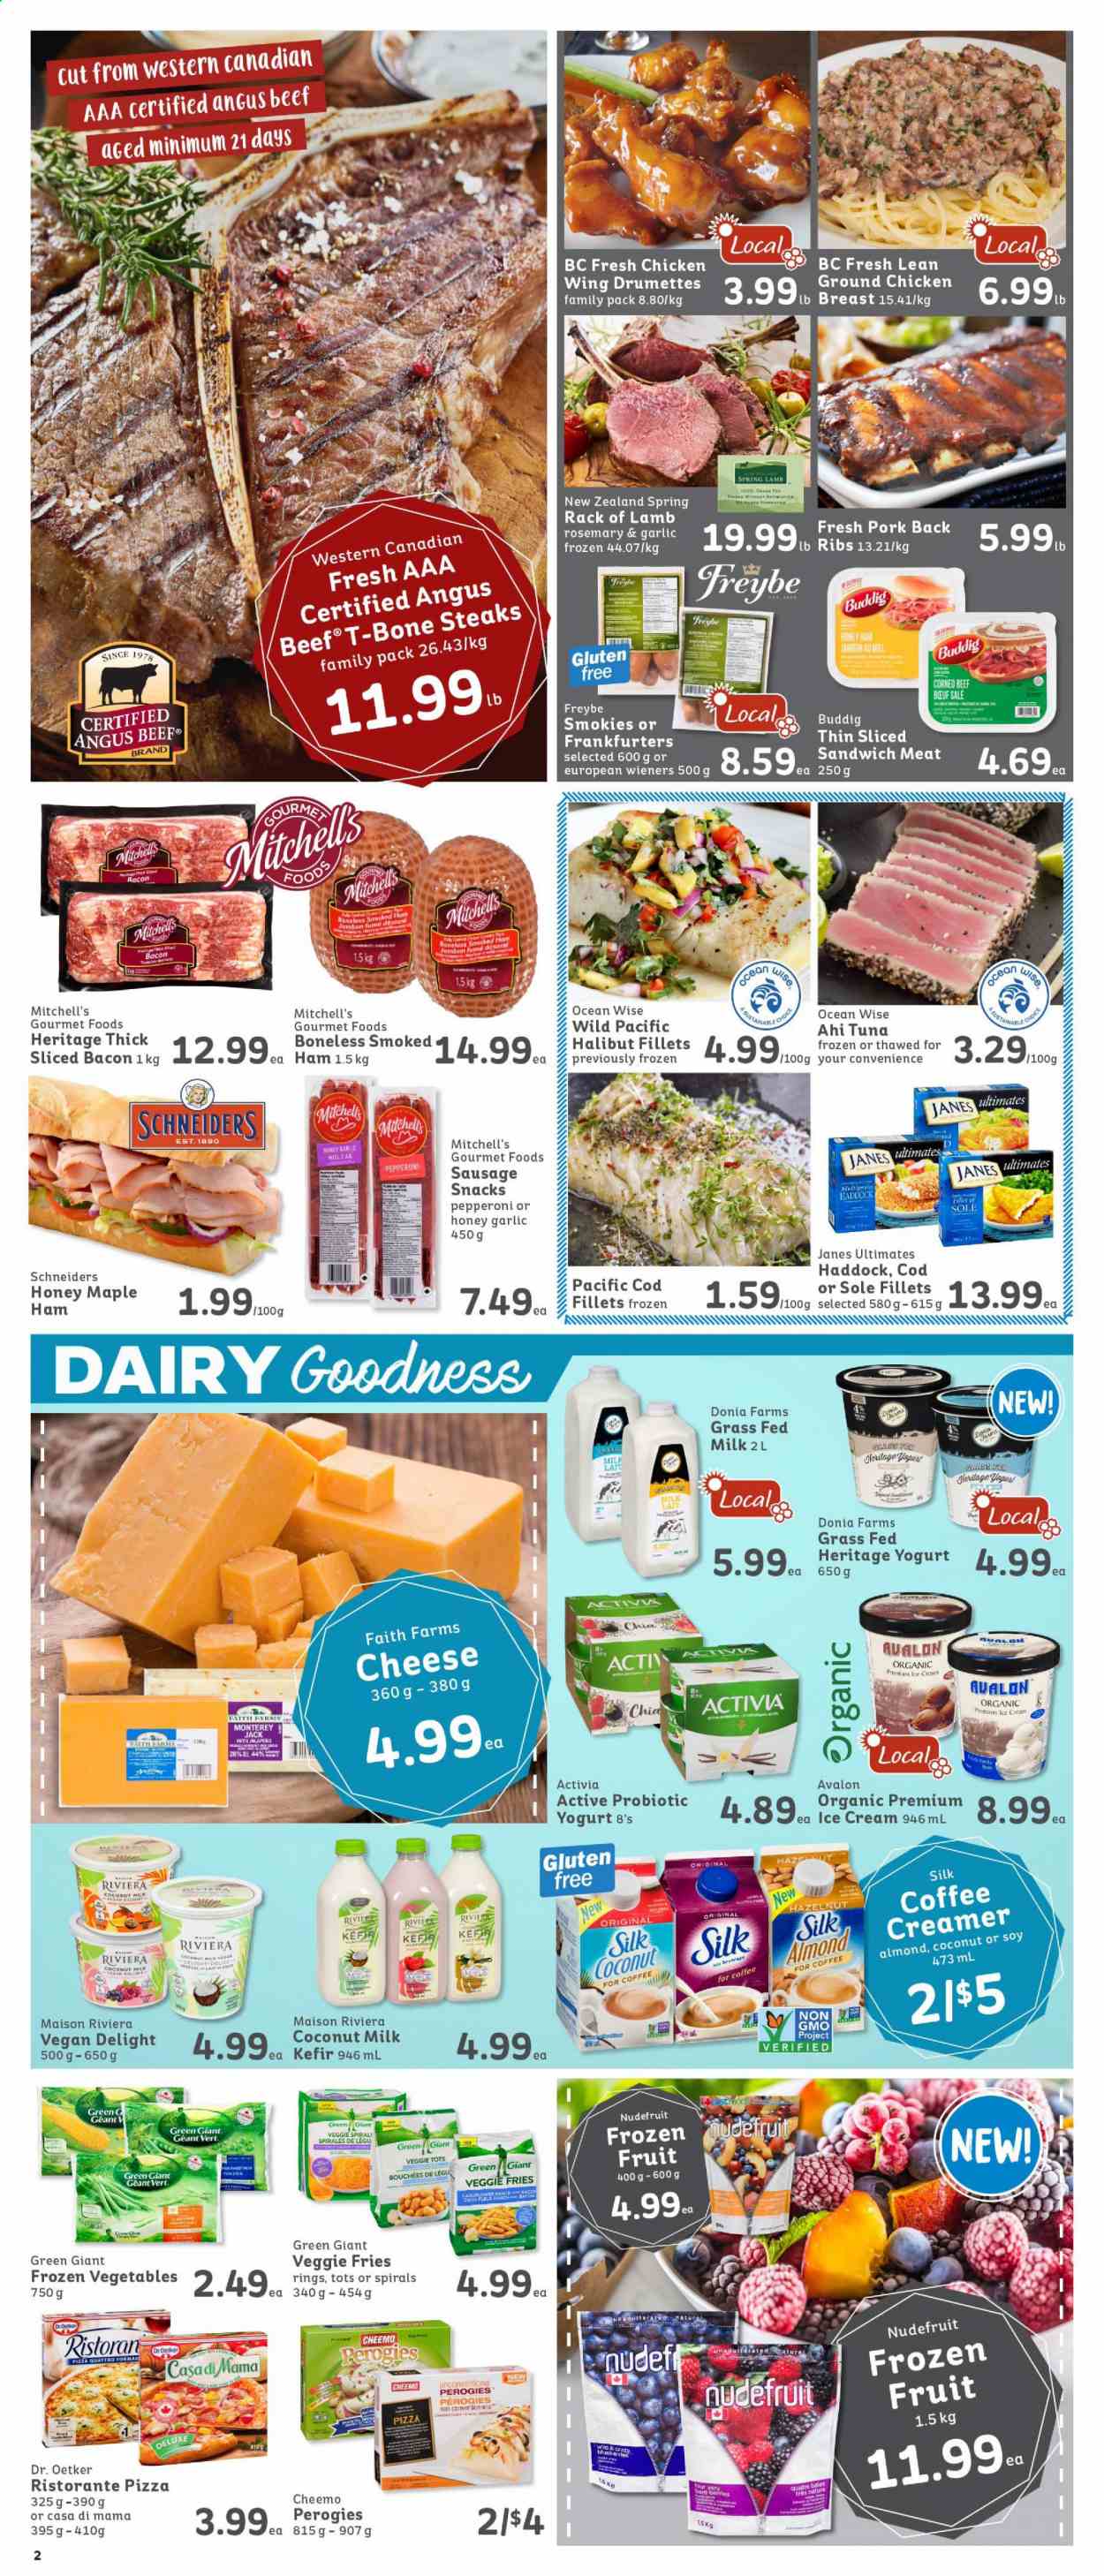 thumbnail - IGA Simple Goodness Flyer - February 19, 2021 - February 25, 2021 - Sales products - jalapeño, blueberries, pears, cod, tuna, haddock, halibut, pizza, sandwich, ham, smoked ham, sausage, pepperoni, corned beef, Monterey Jack cheese, Dr. Oetker, yoghurt, Activia, kefir, creamer, ice cream, frozen vegetables, veggie fries, snack, coconut milk, rosemary, ground chicken, chicken, beef meat, t-bone steak, lamb meat, rack of lamb, steak. Page 2.